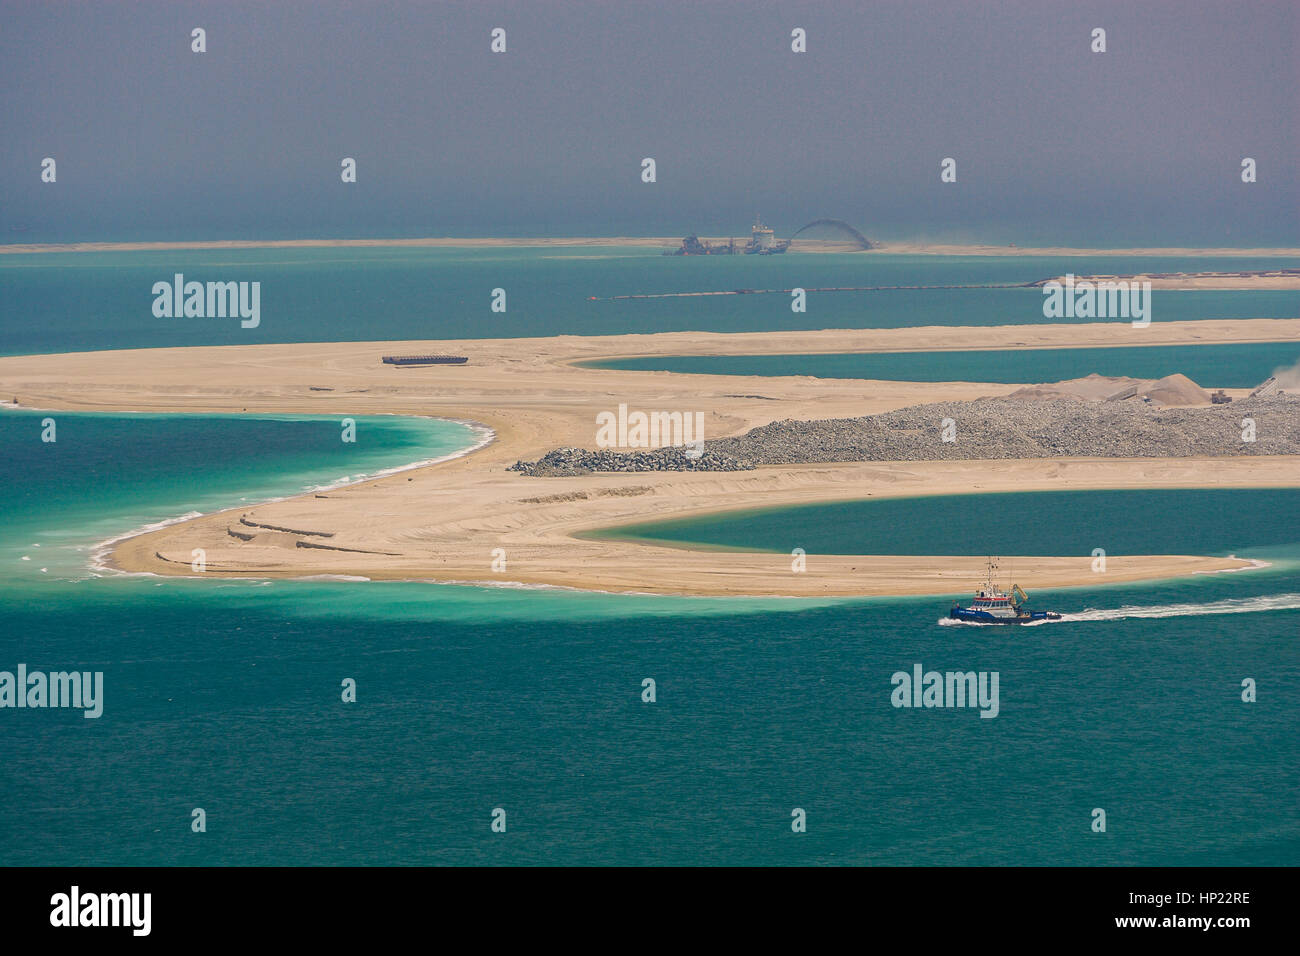 DUBAI, UNITED ARAB EMIRATES - Land reclamation in progress, creating new land area in Gulf, for development. Stock Photo